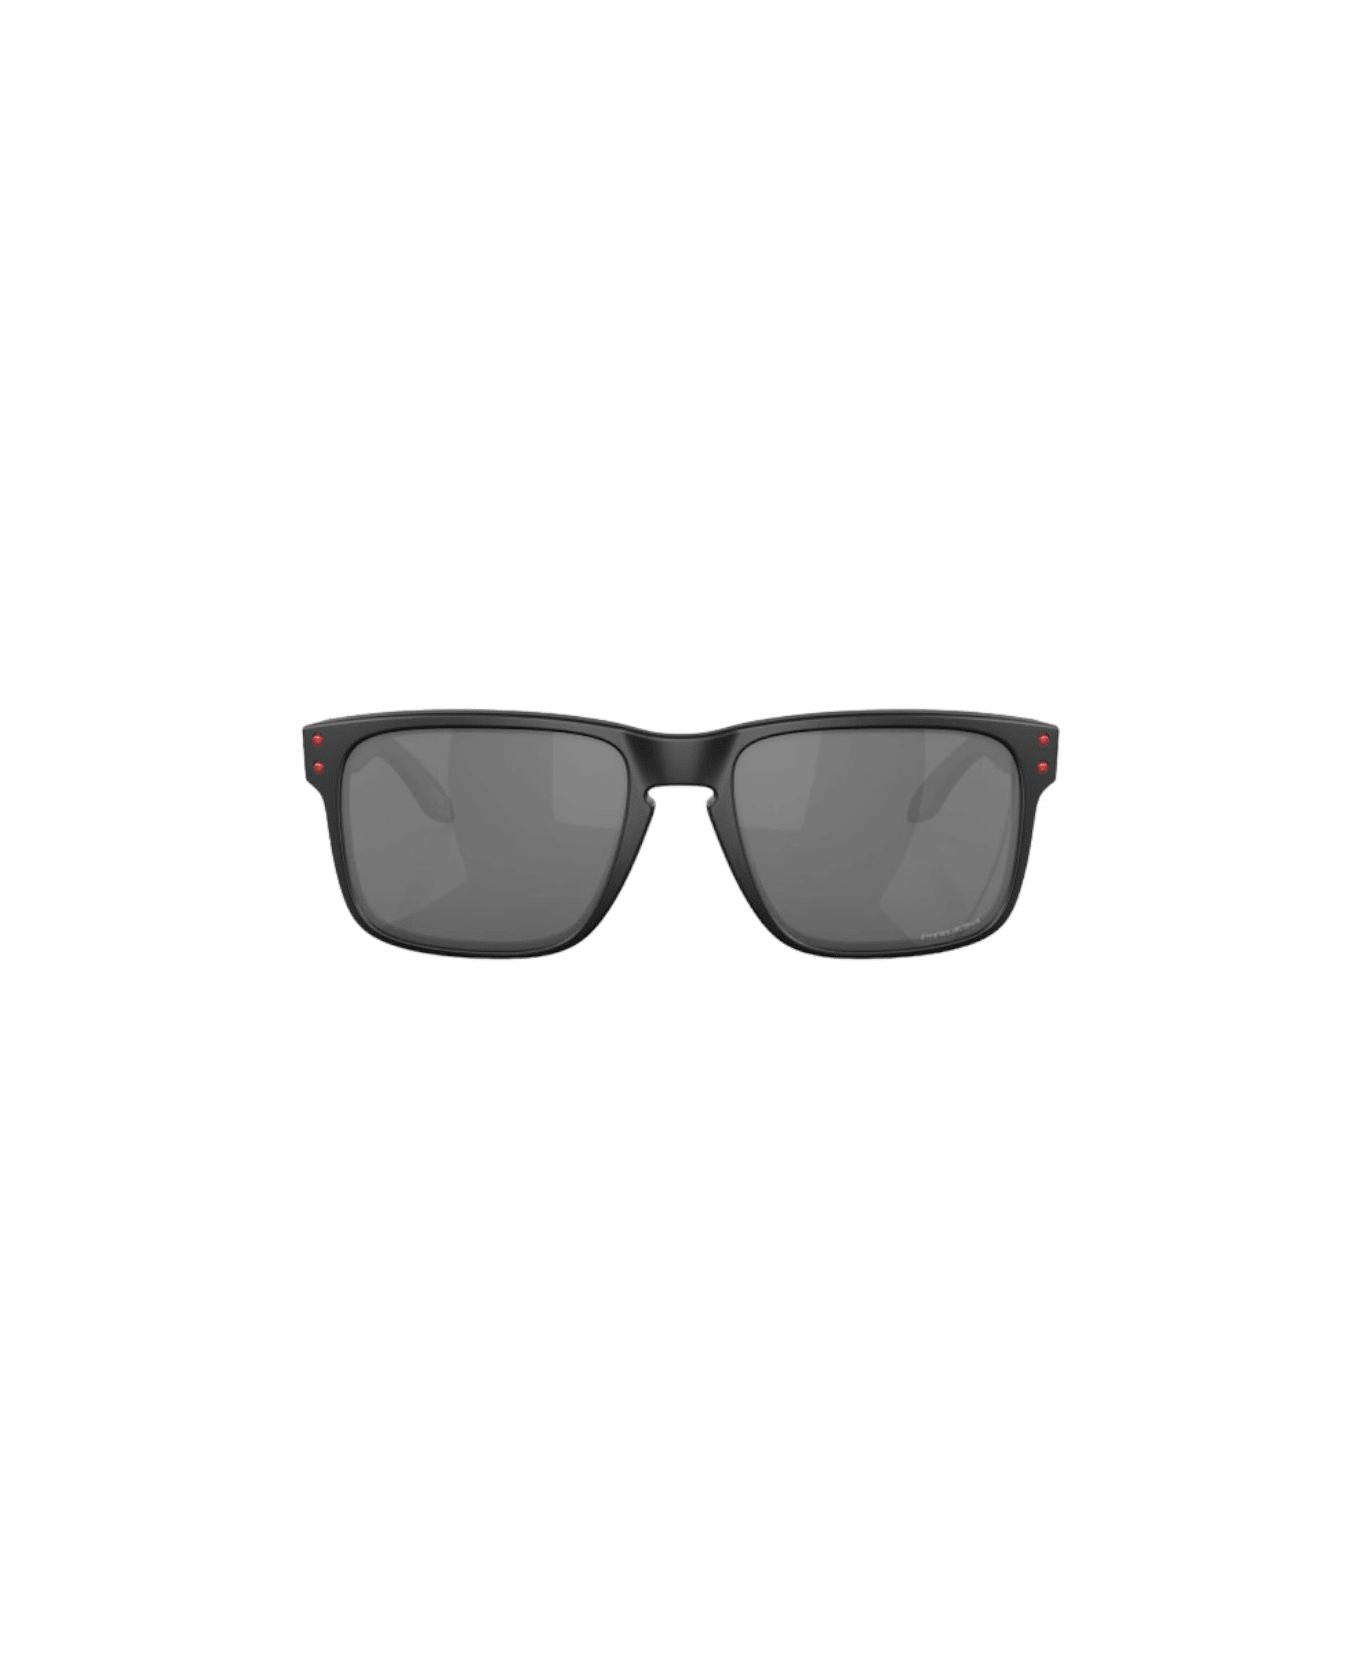 Oakley Holbrook - 9102 Sunglasses